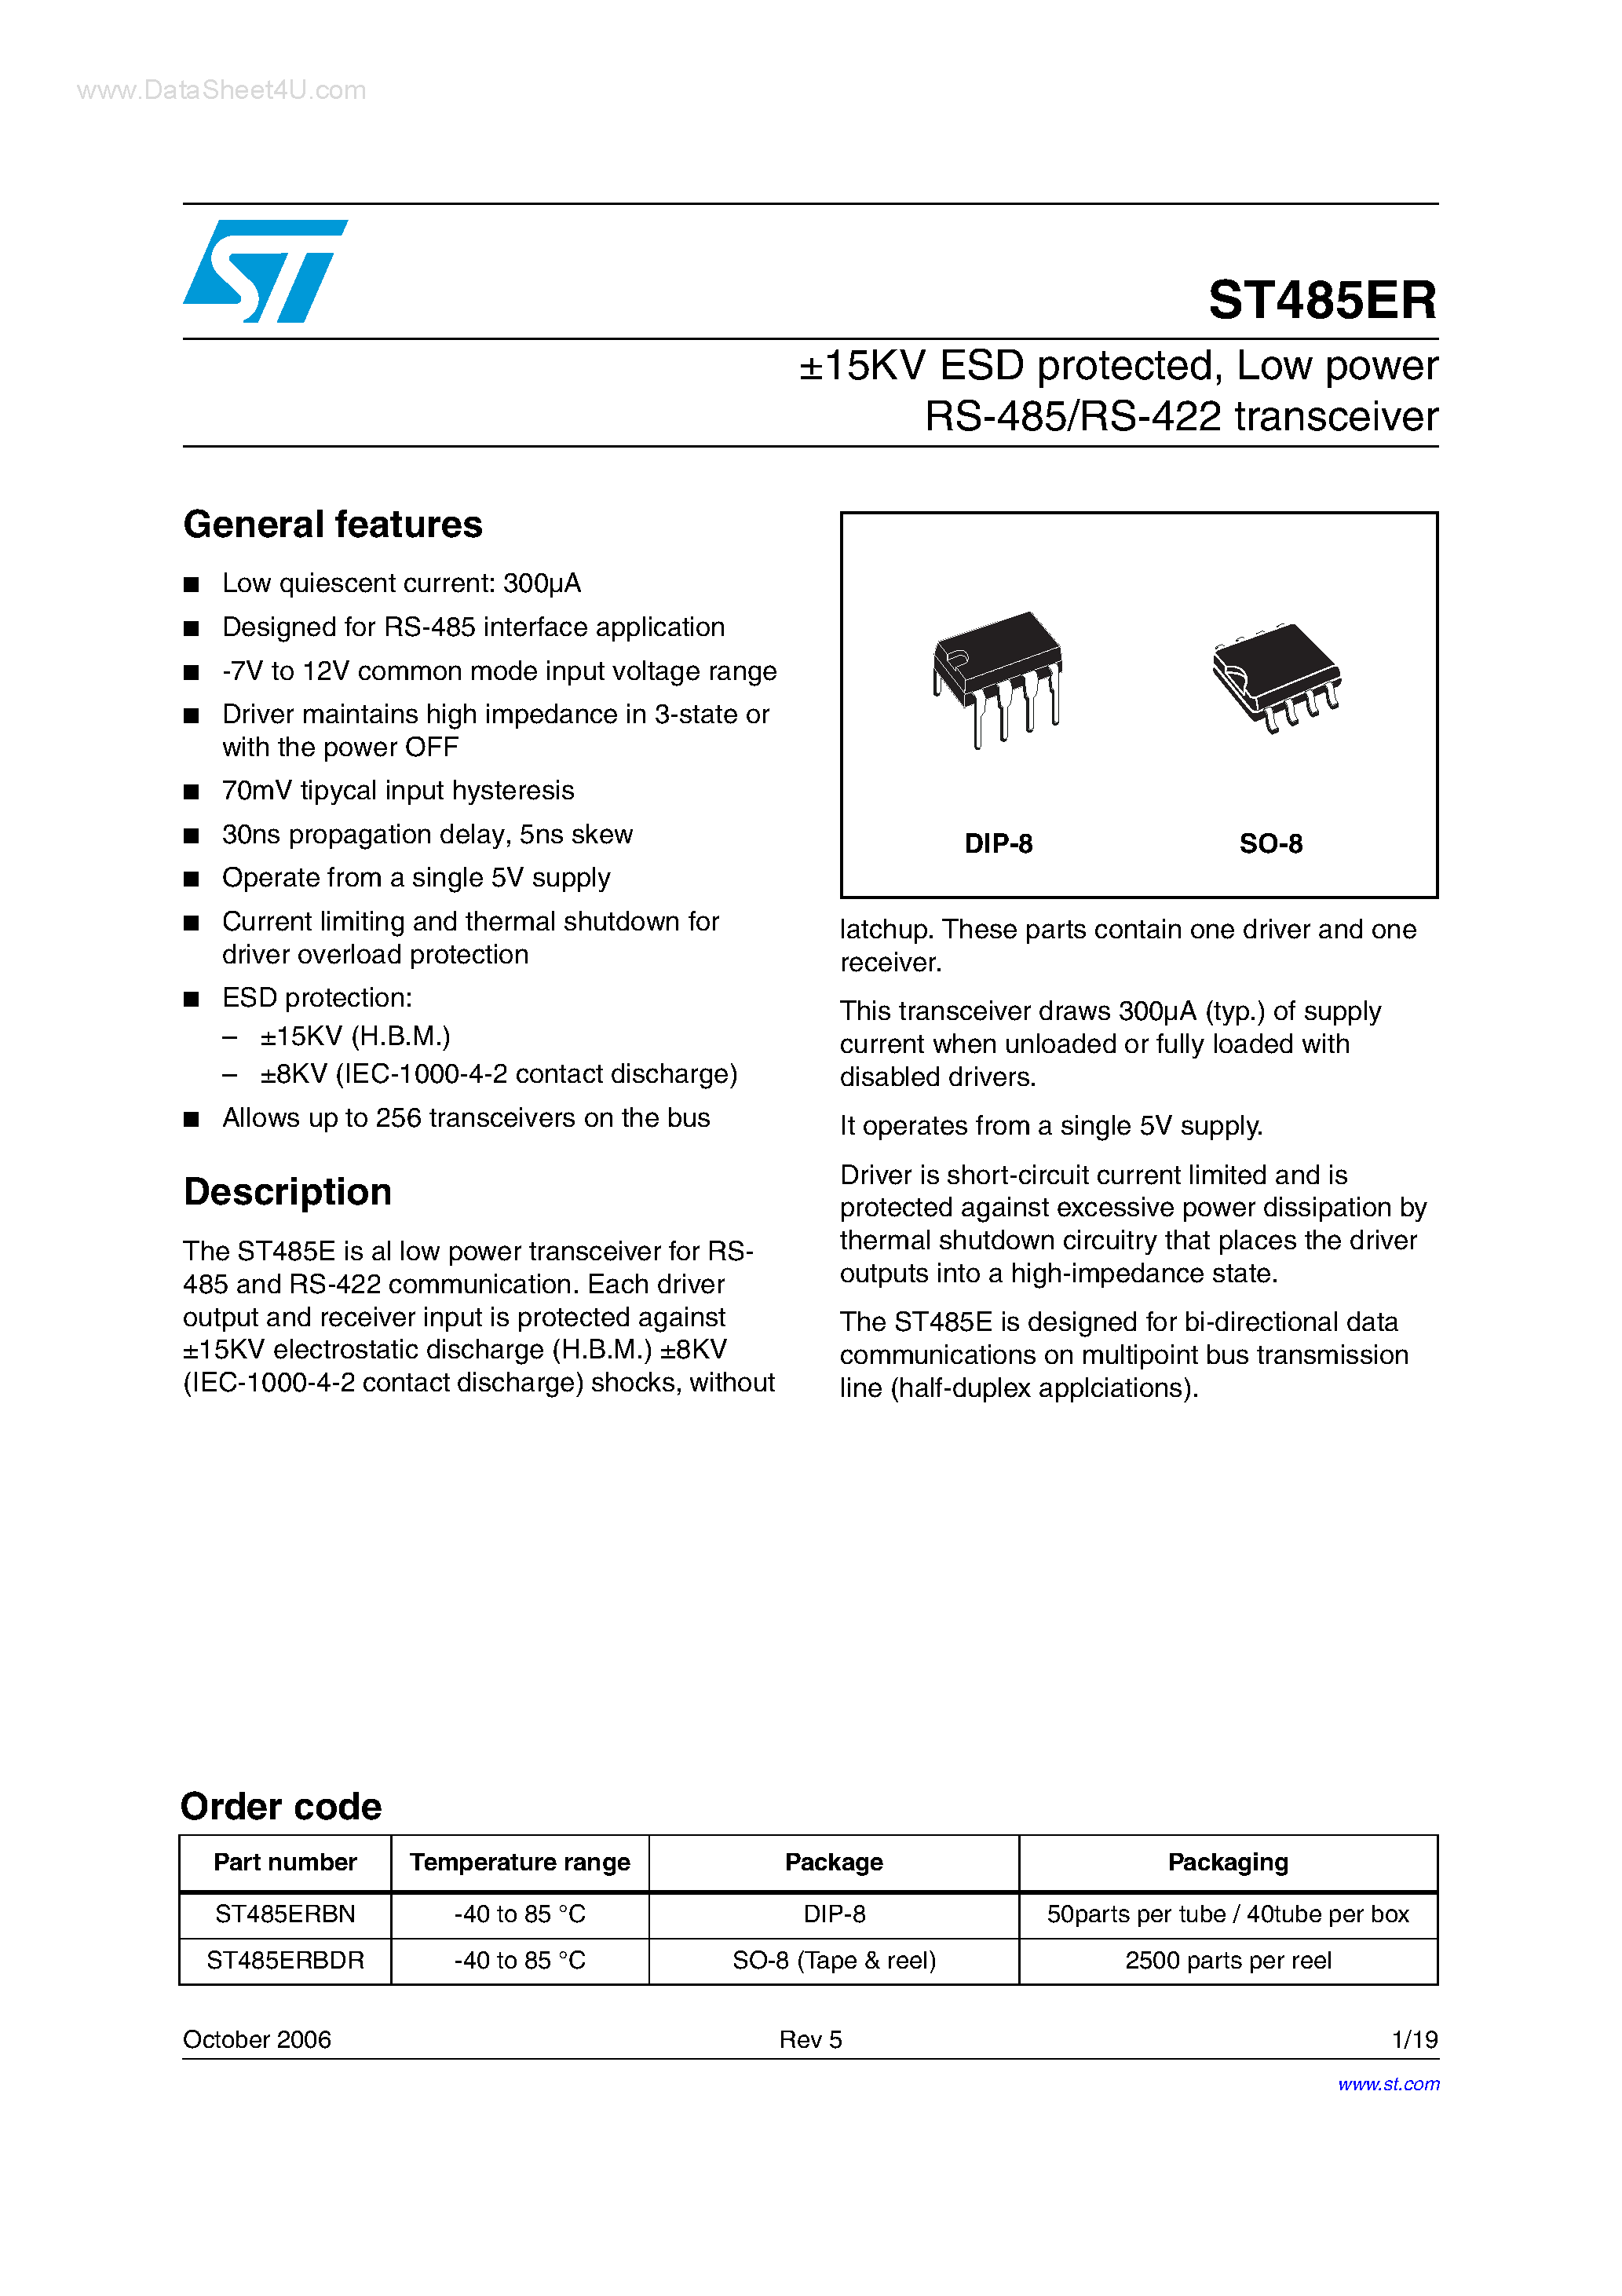 Даташит ST485ER - Low power RS-485/RS-422 transceiver страница 1